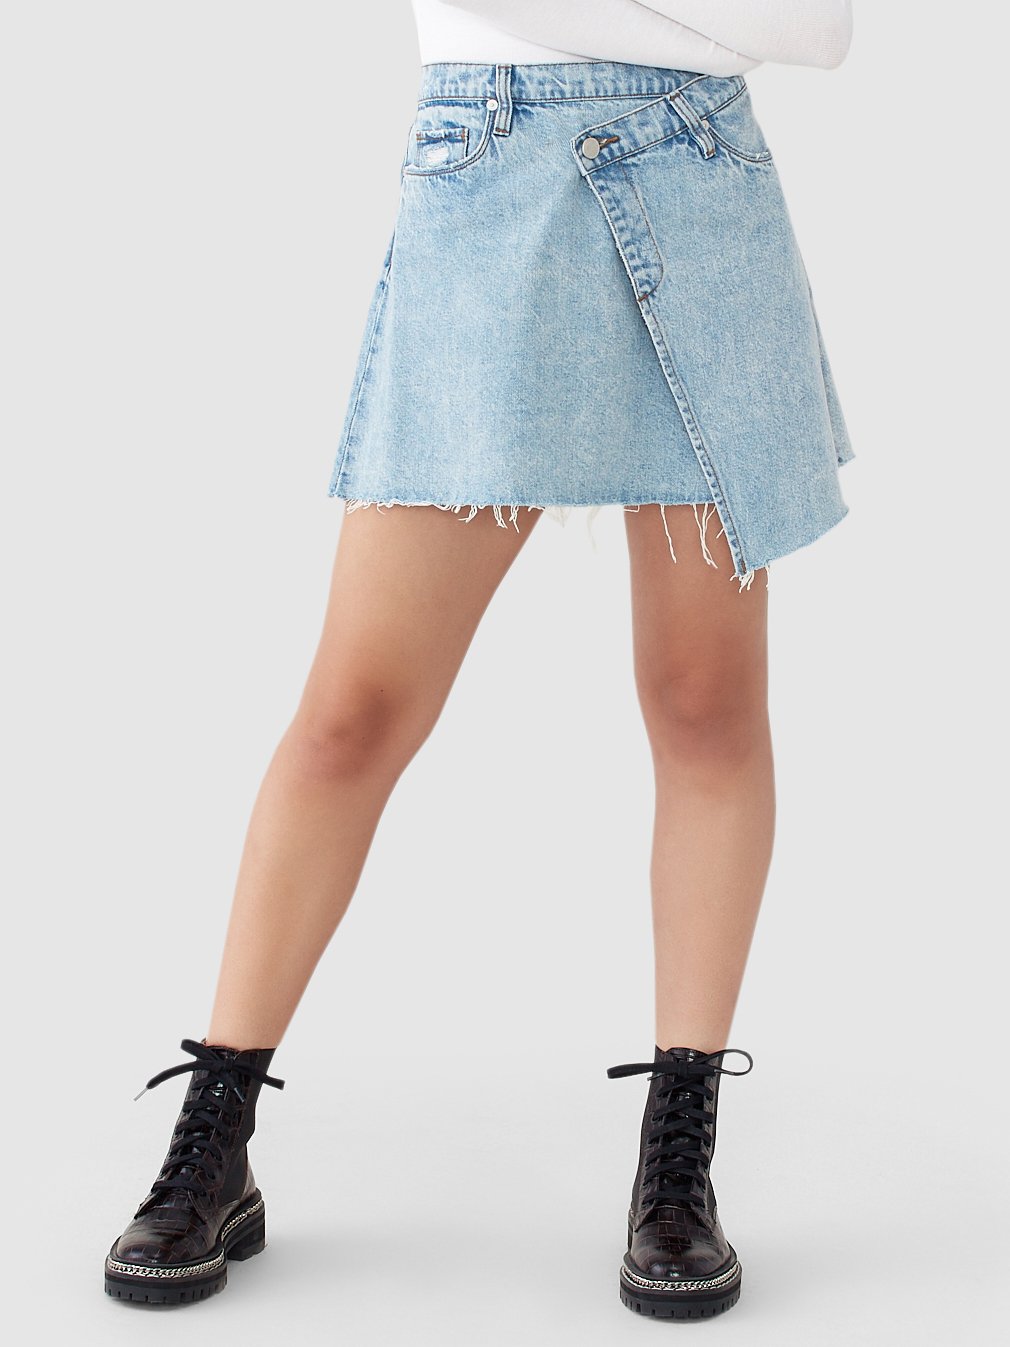 asymmetrical jean skirt